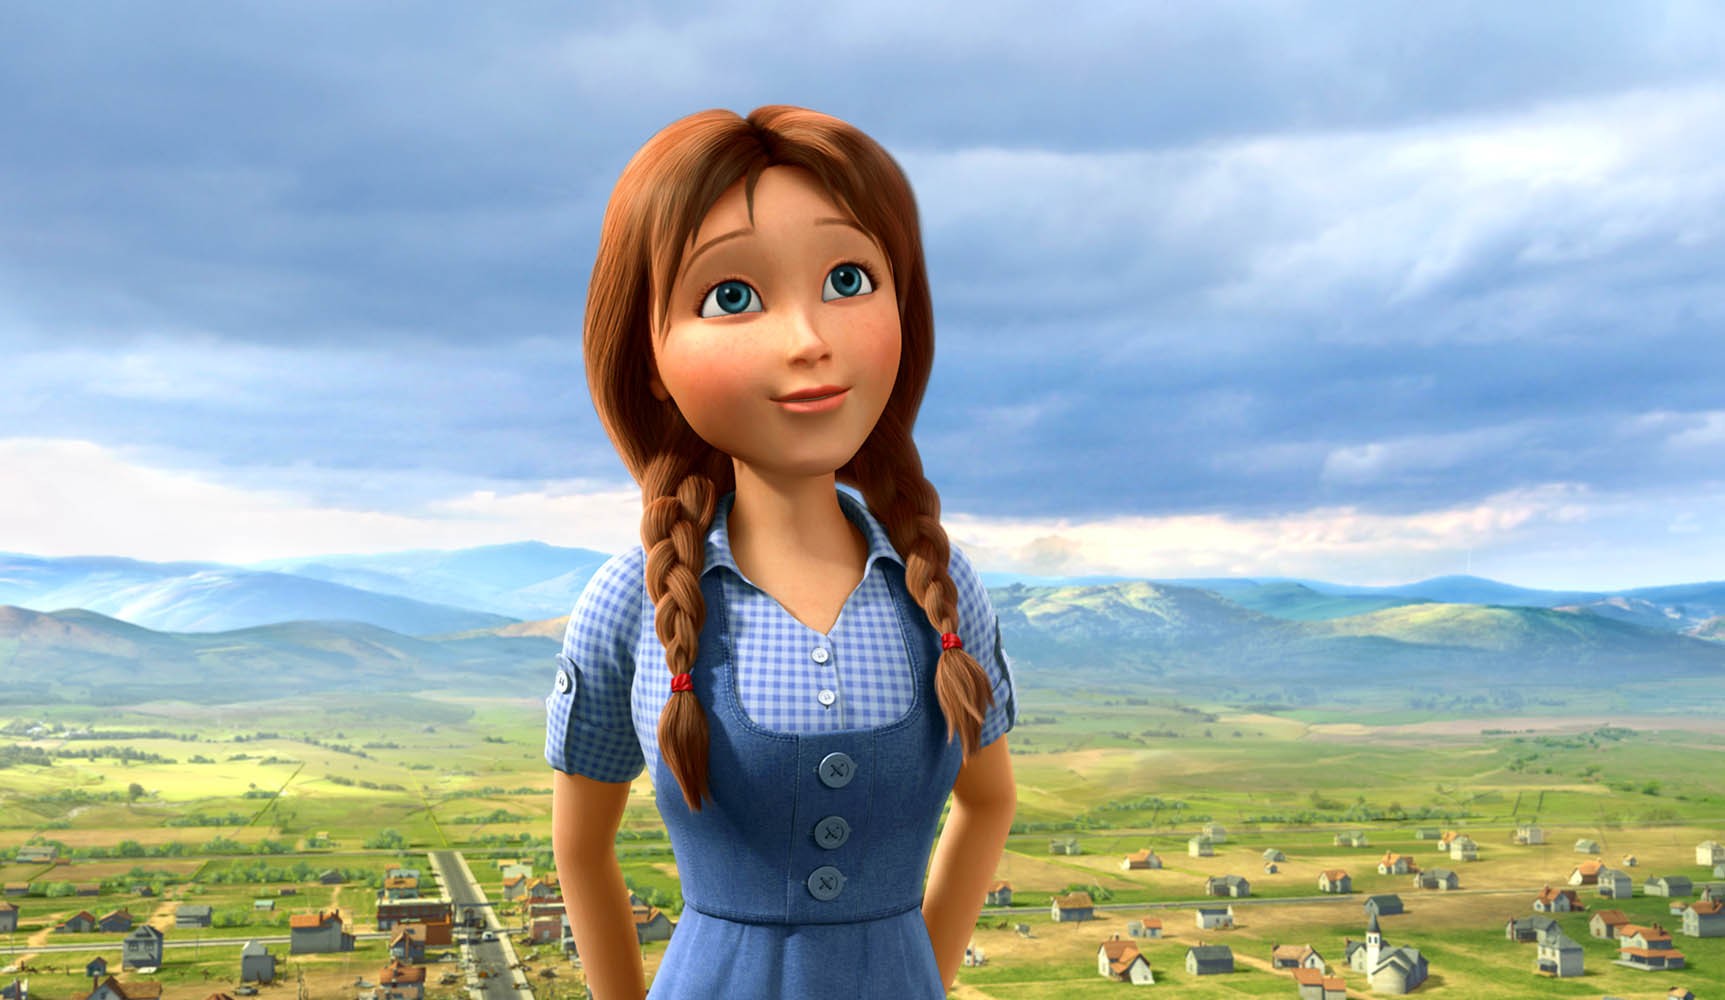 Dorothy Gale from Summertime Entertainment's Legends of Oz: Dorothy's Return (2014)